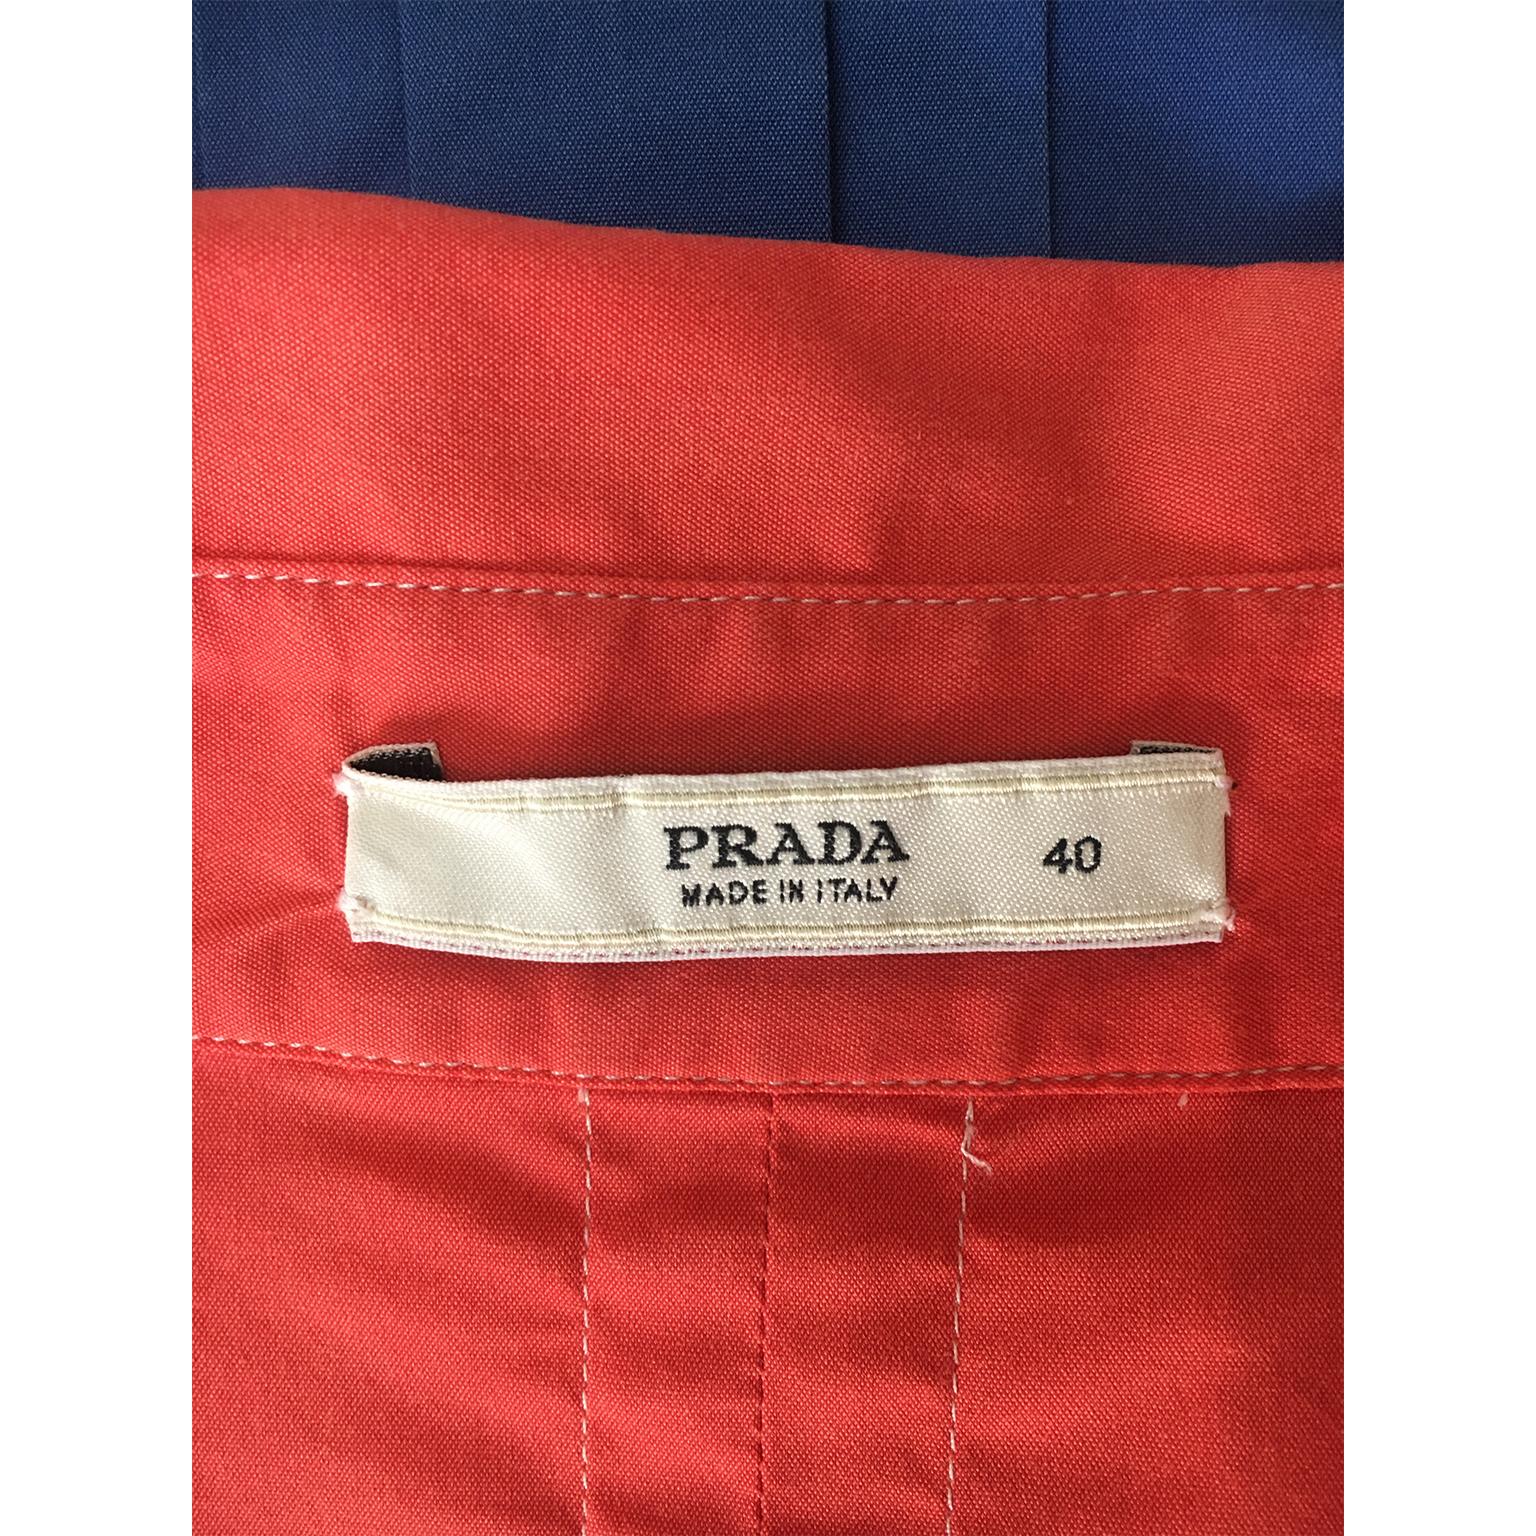 Prada Tie dye Red Blue Bicolour Shirt Dress SS 2004 For Sale 8